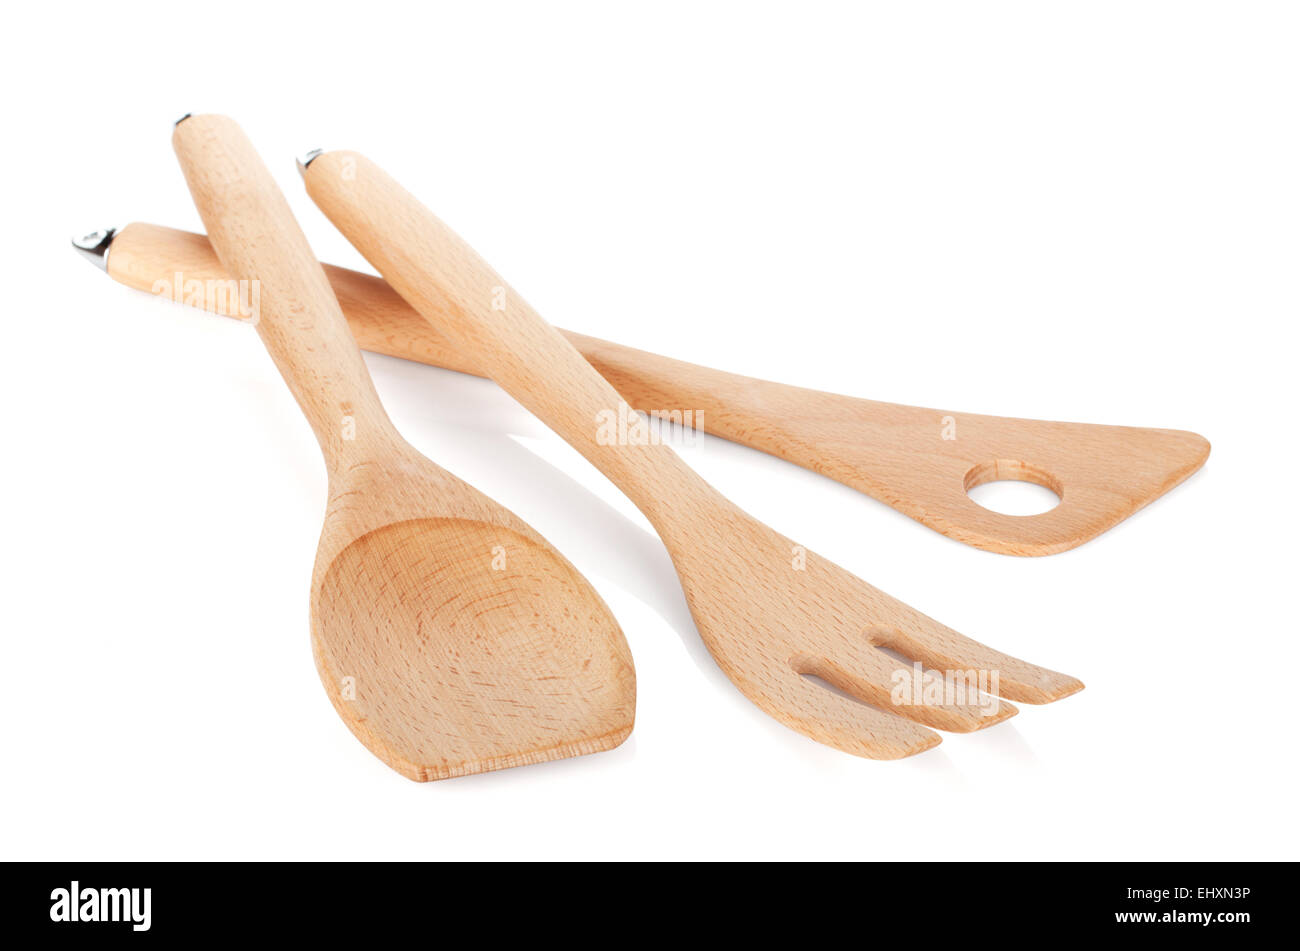 Wooden kitchen utensils. Isolated on white background Stock Photo